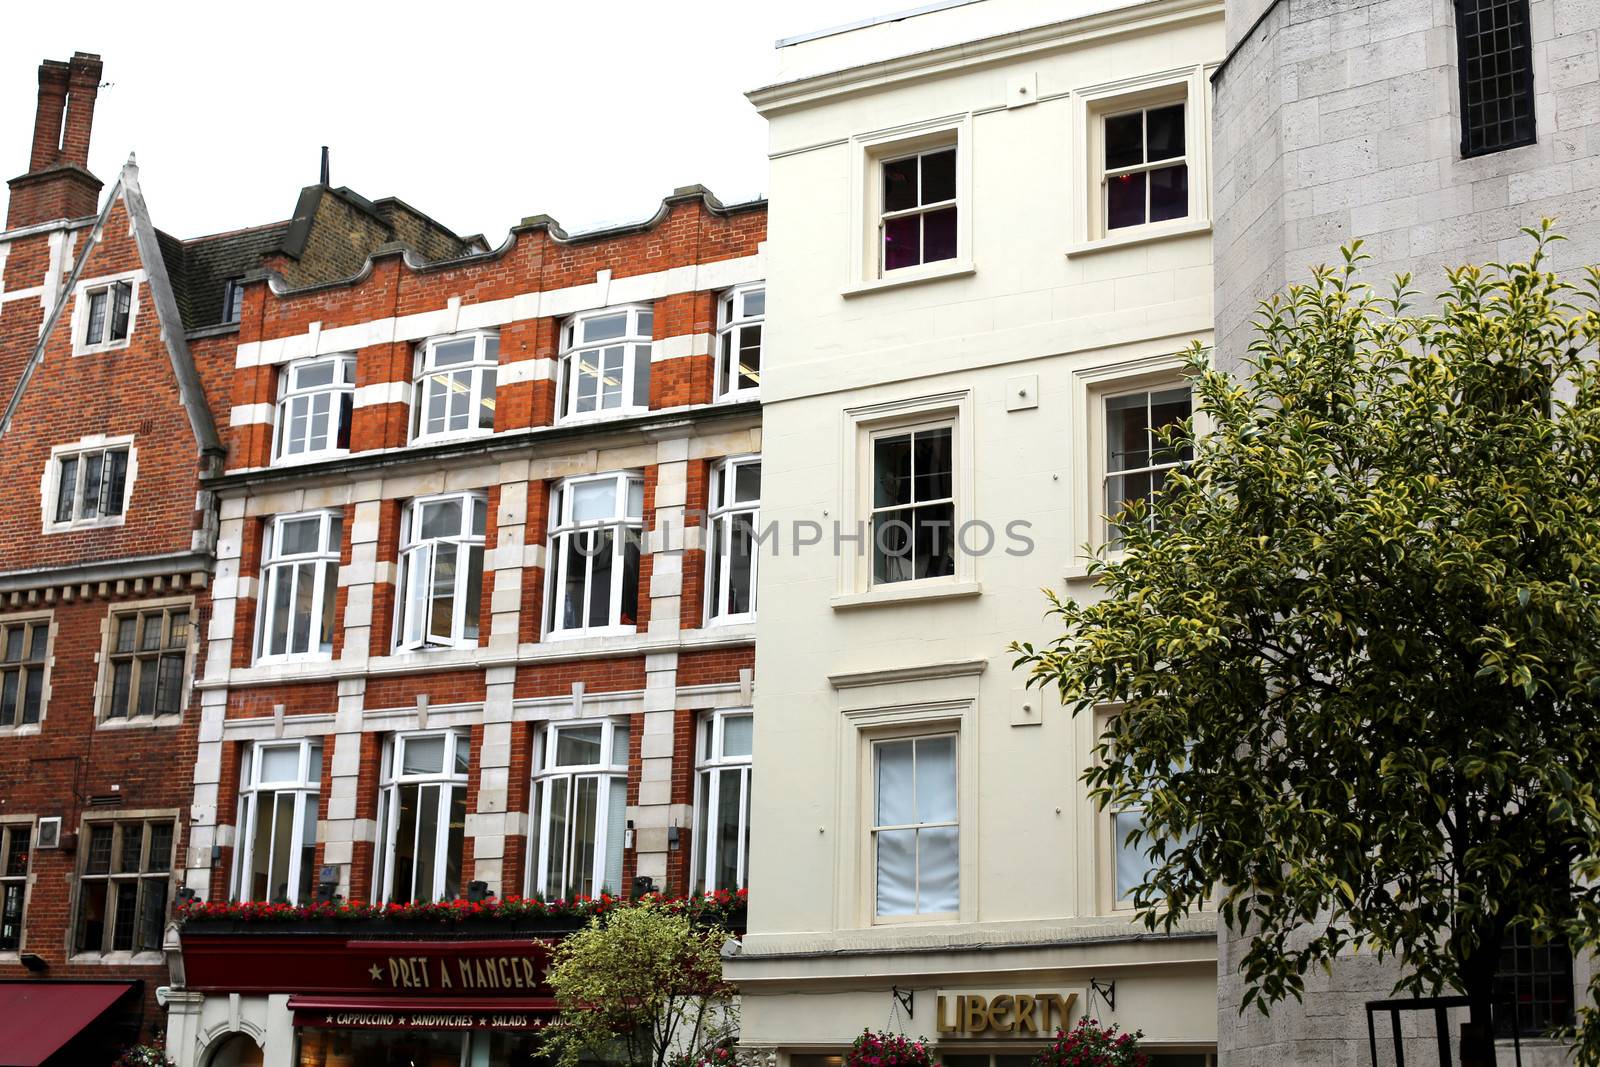 Carnaby Street London by Whiteboxmedia